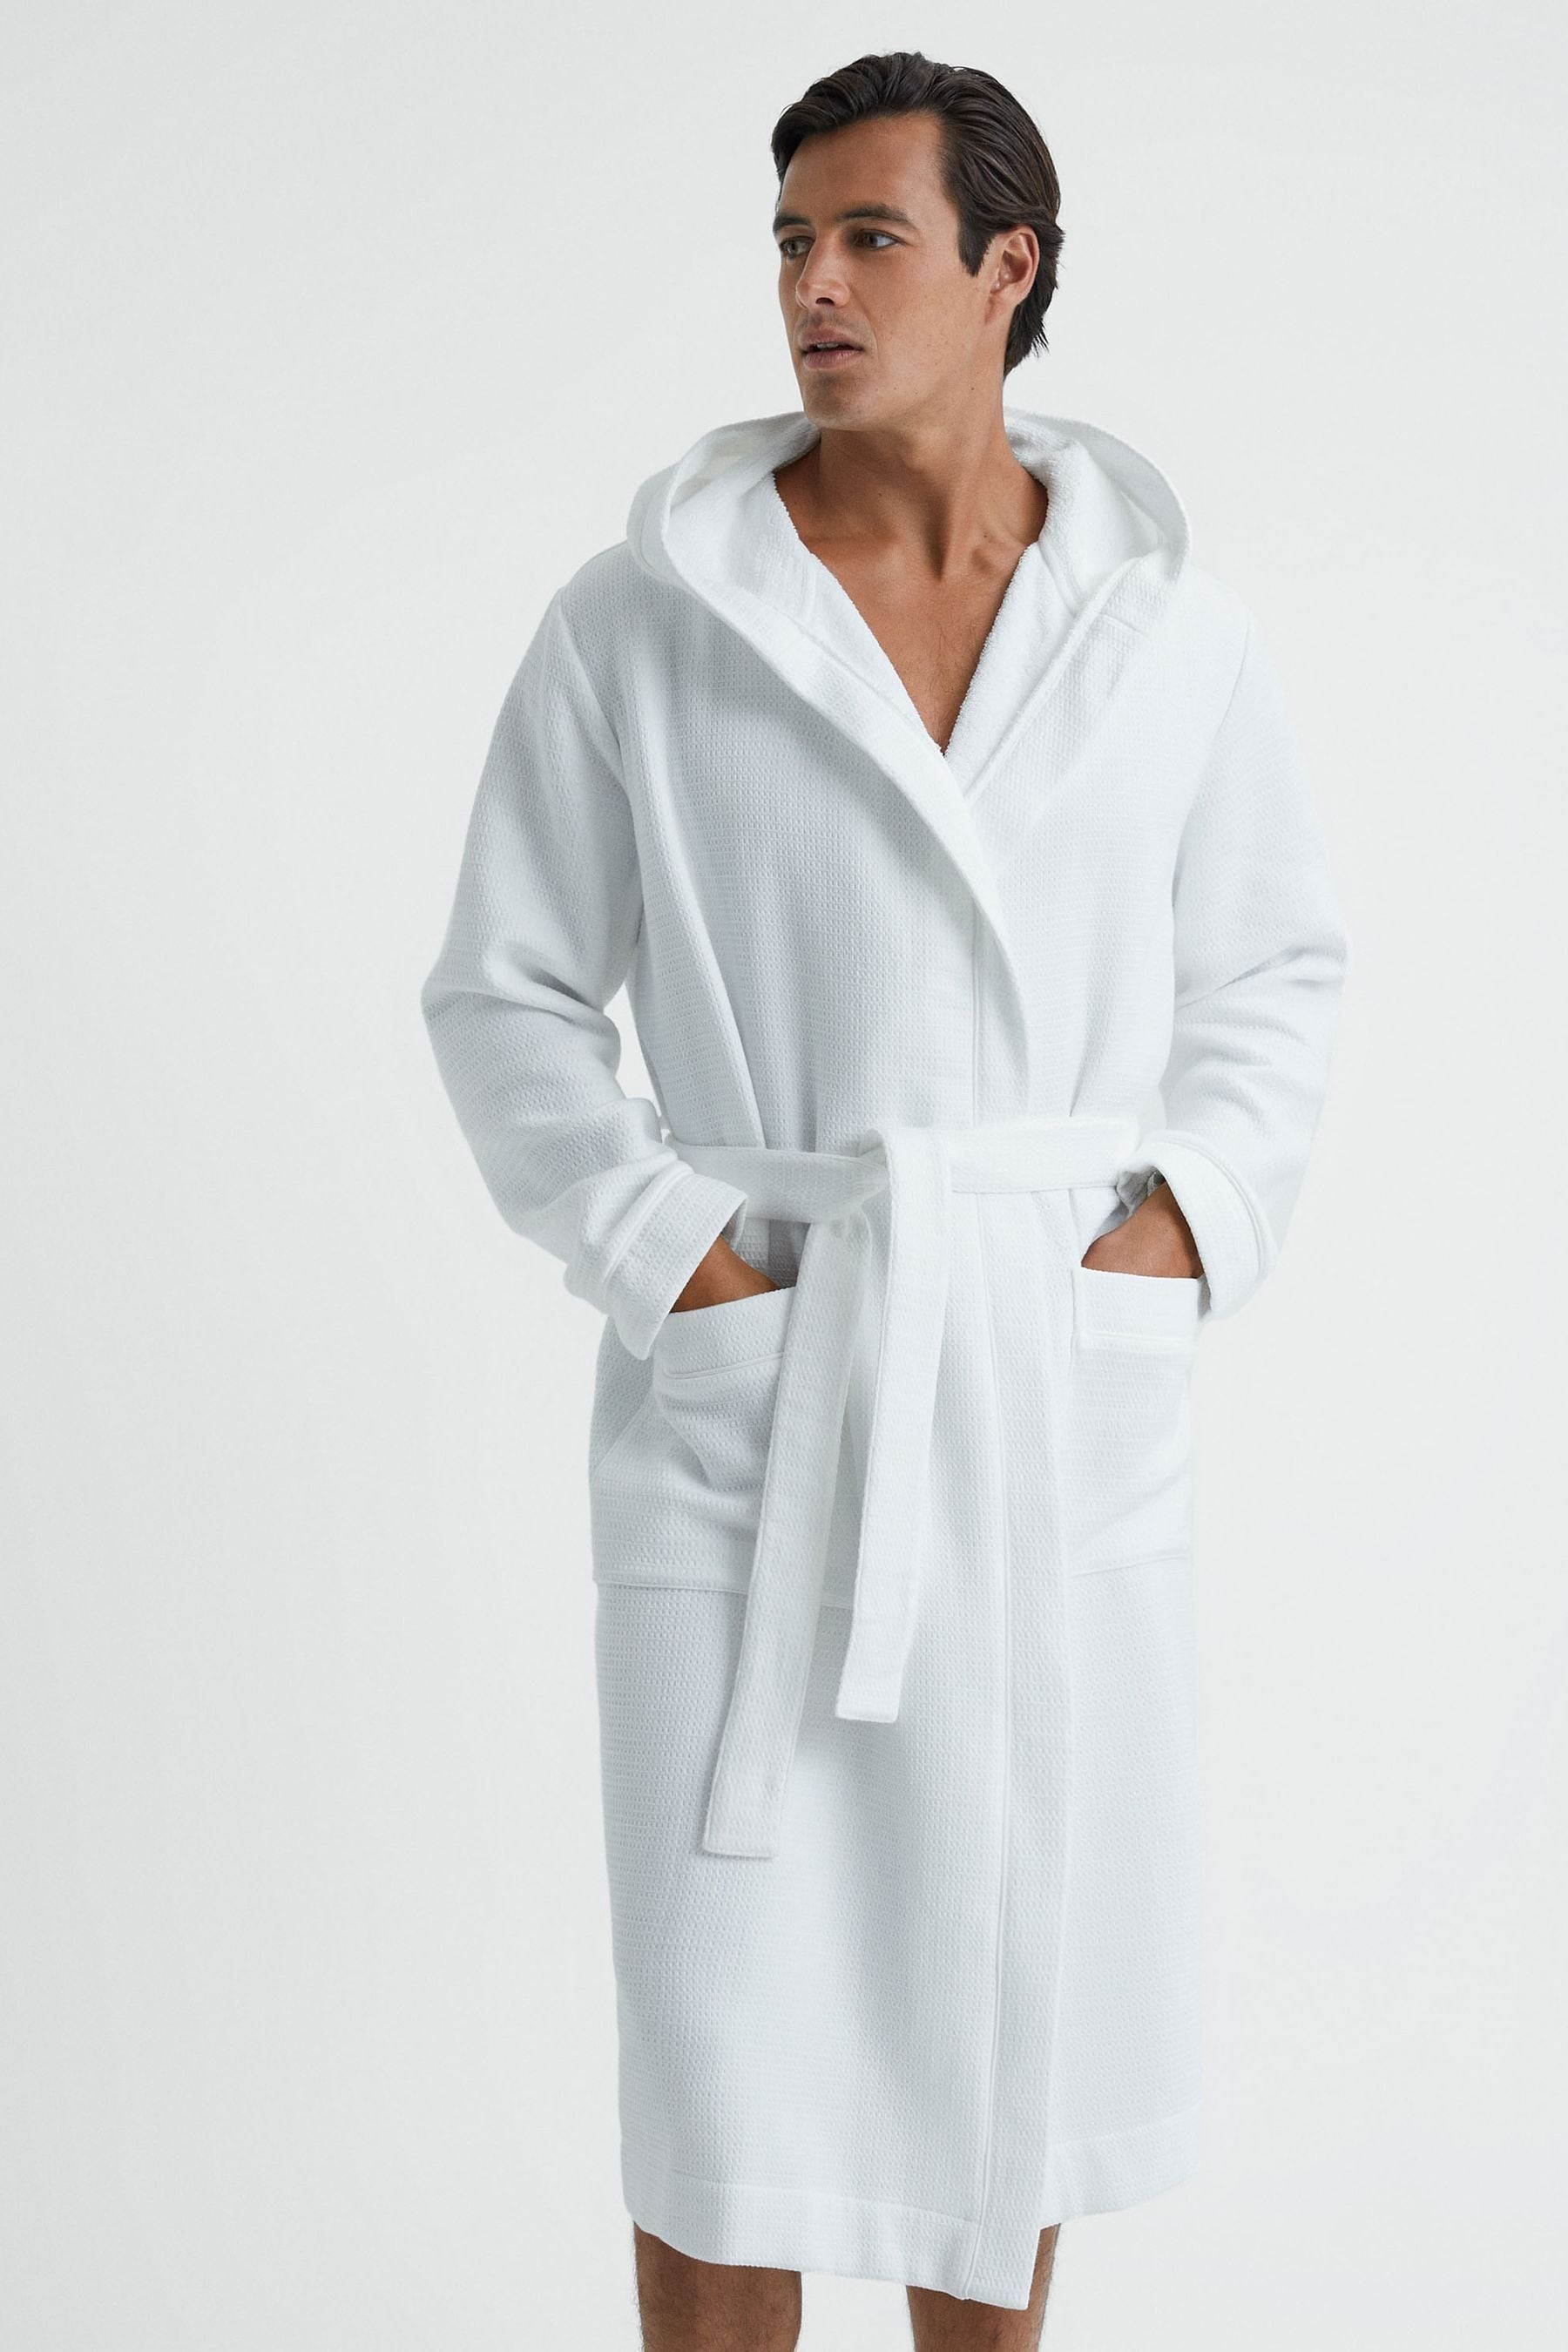 Reiss Coastal - White Textured Cotton Hooded Dressing Gown, Xxl